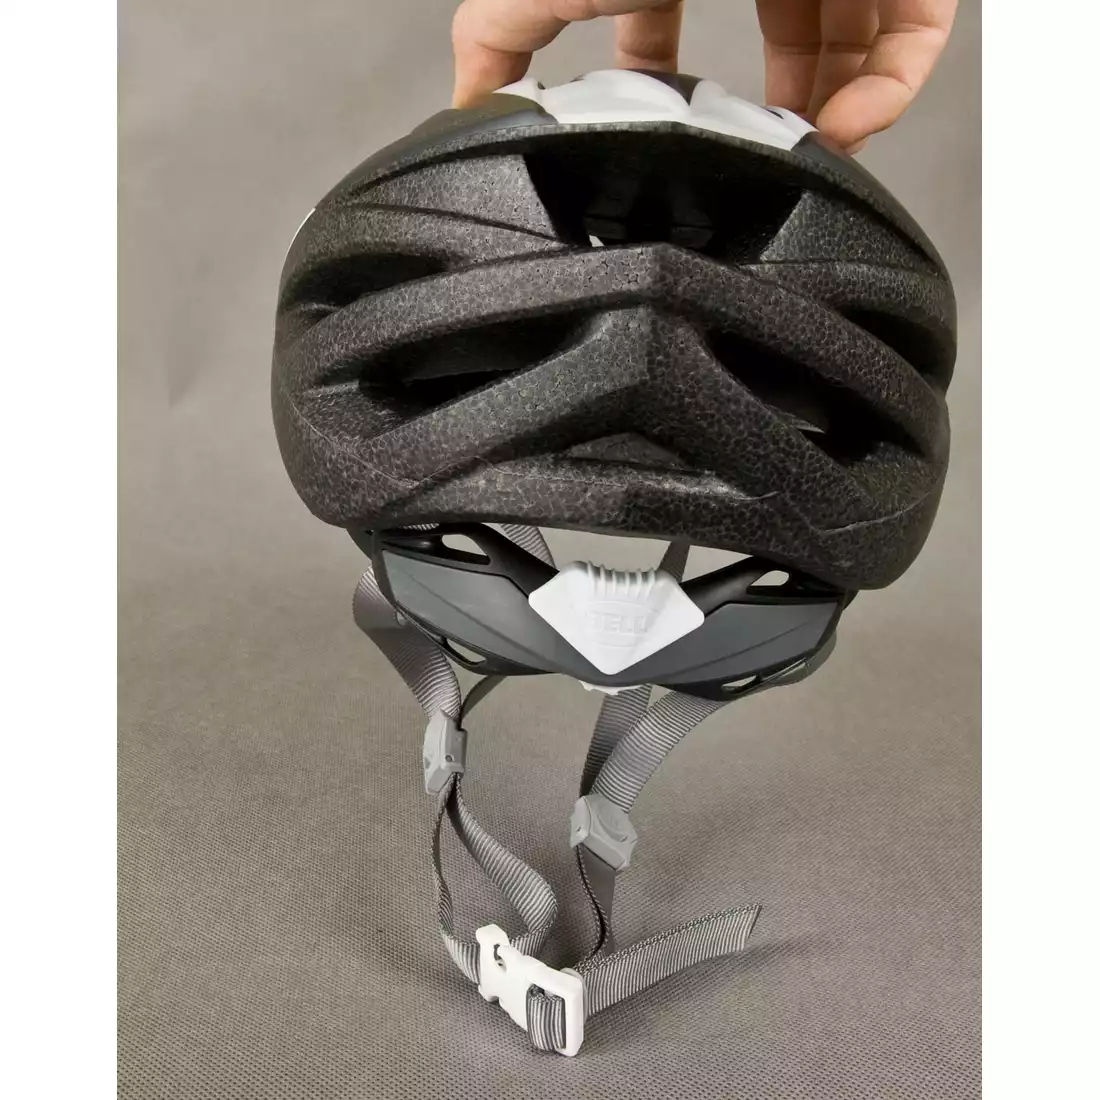 BELL PRESIDIO - kask rowerowy, kolor: Biało-srebrny